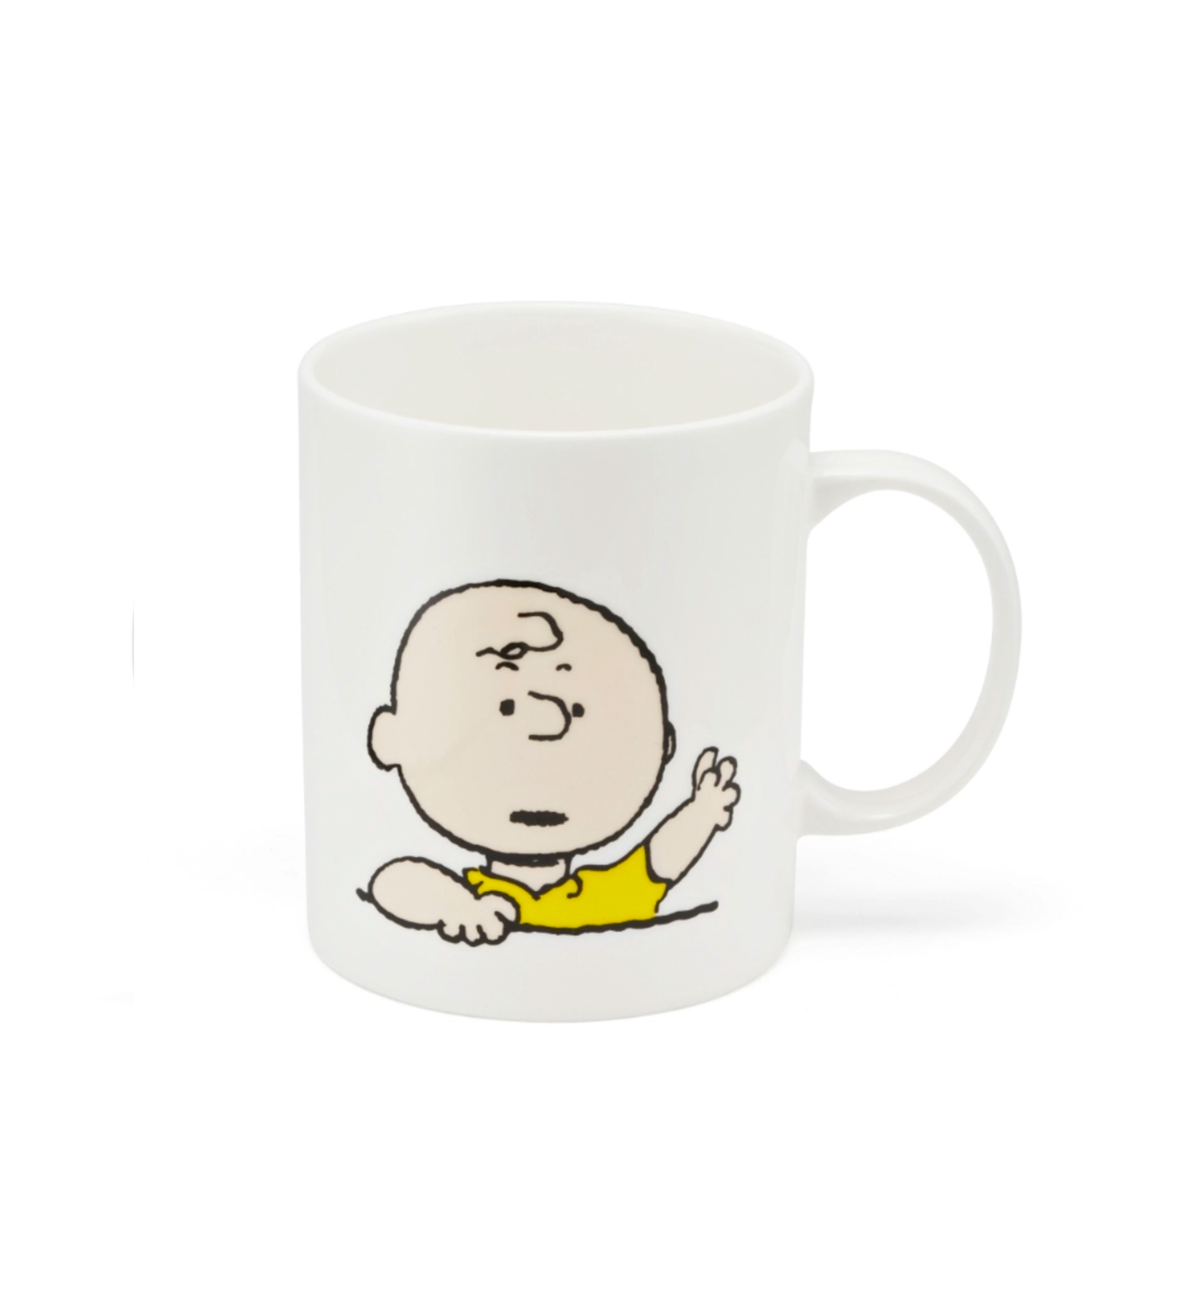 Wall of Thoughts Charlie Brown Mug Cup